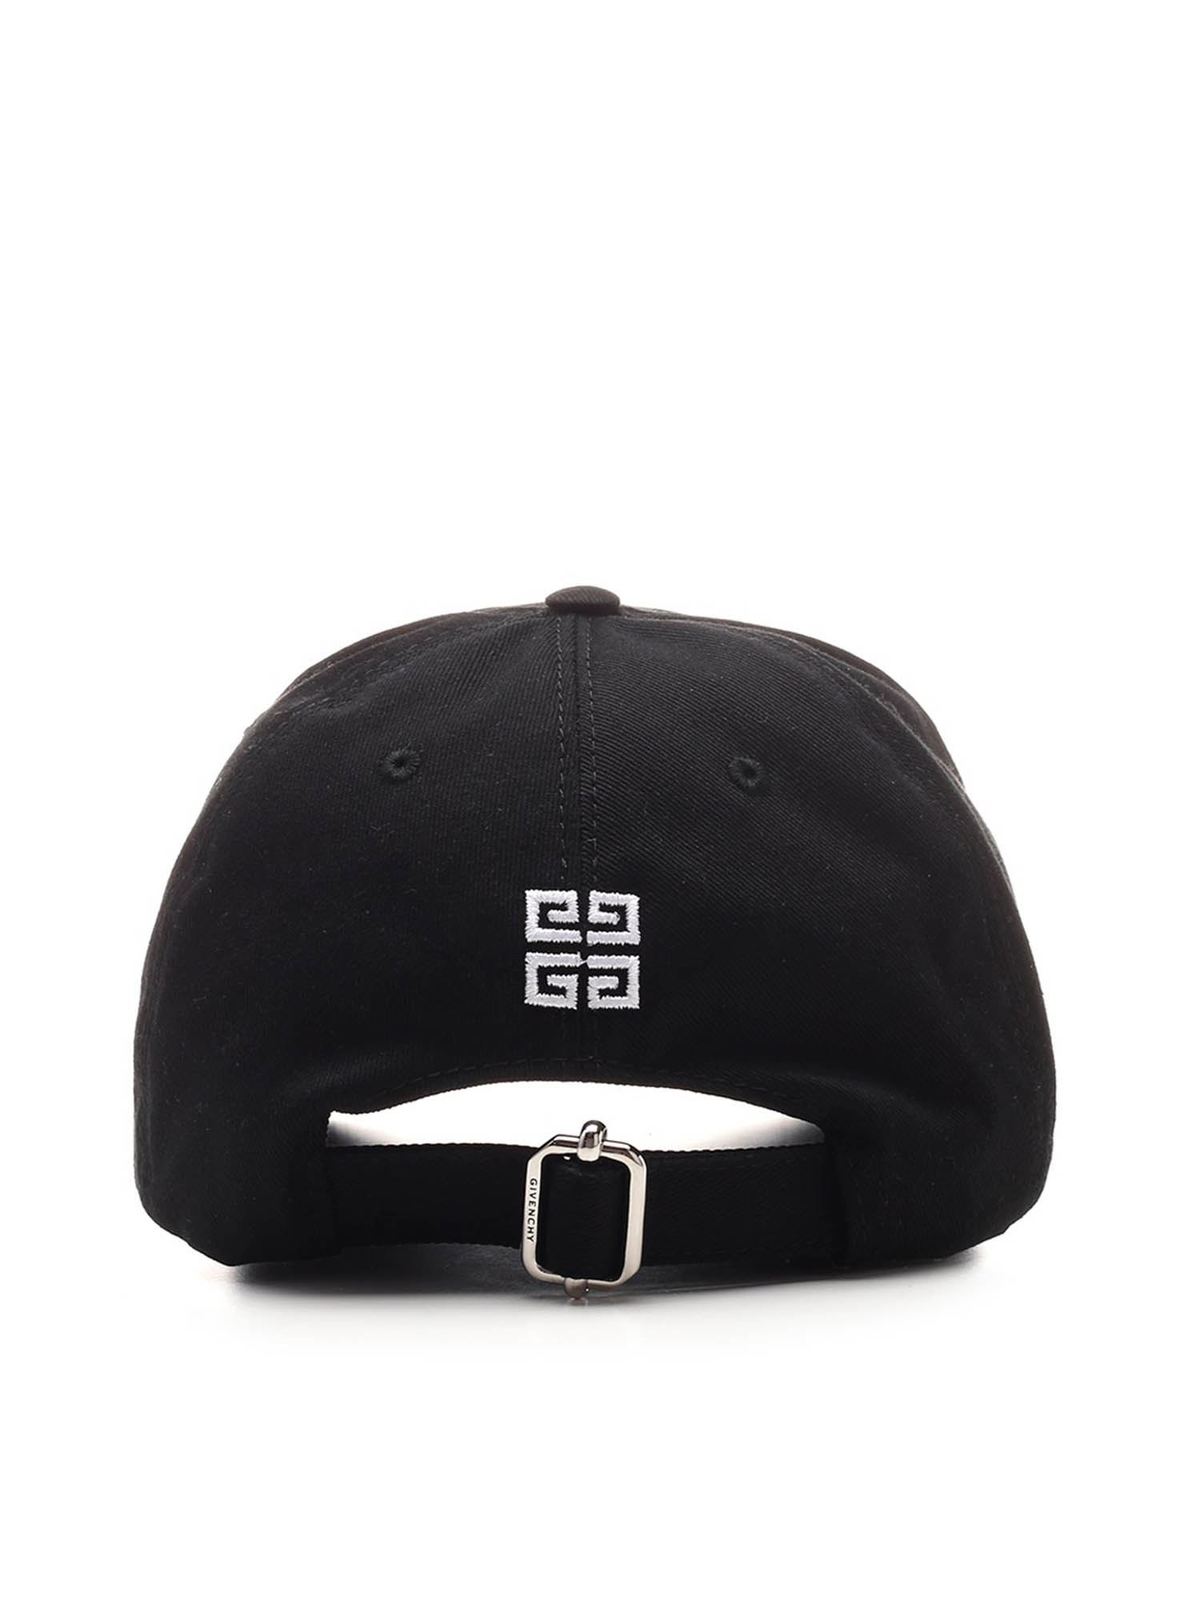 Hats & caps Givenchy - Signature baseball cap in black - BPZ022P0C4001